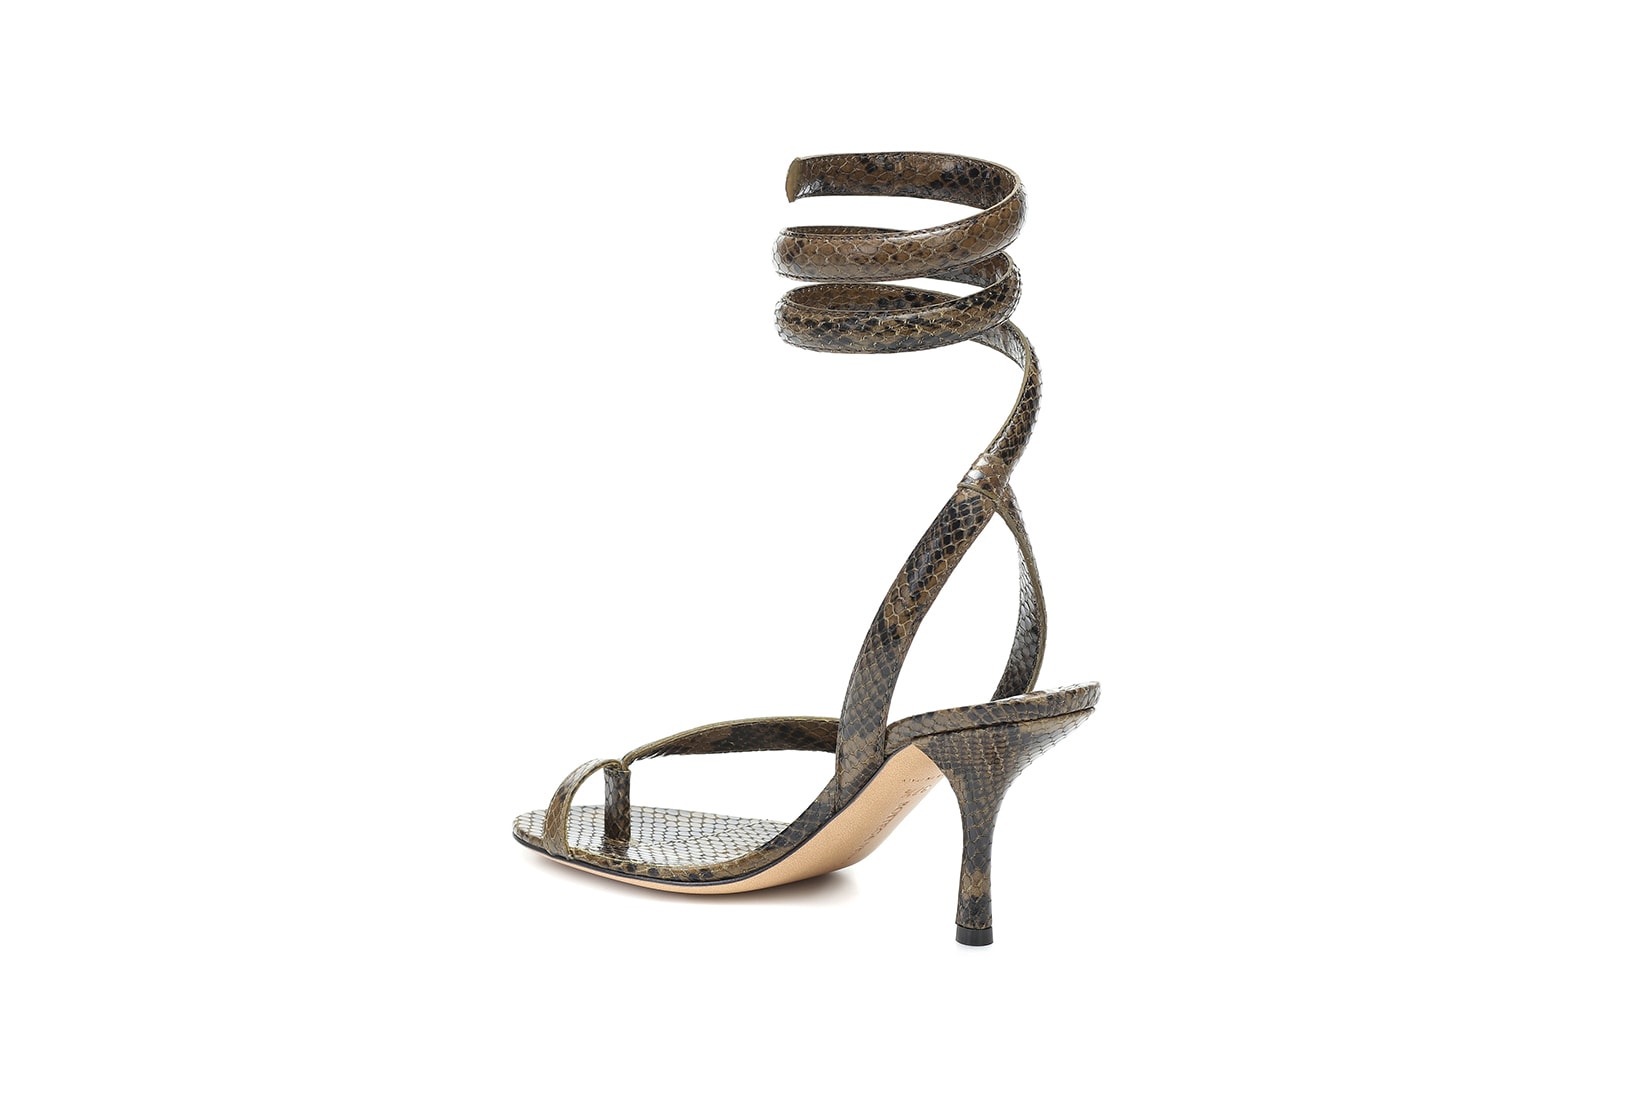 bottega veneta snake effect leather heels pre spring 2020 daniel lee